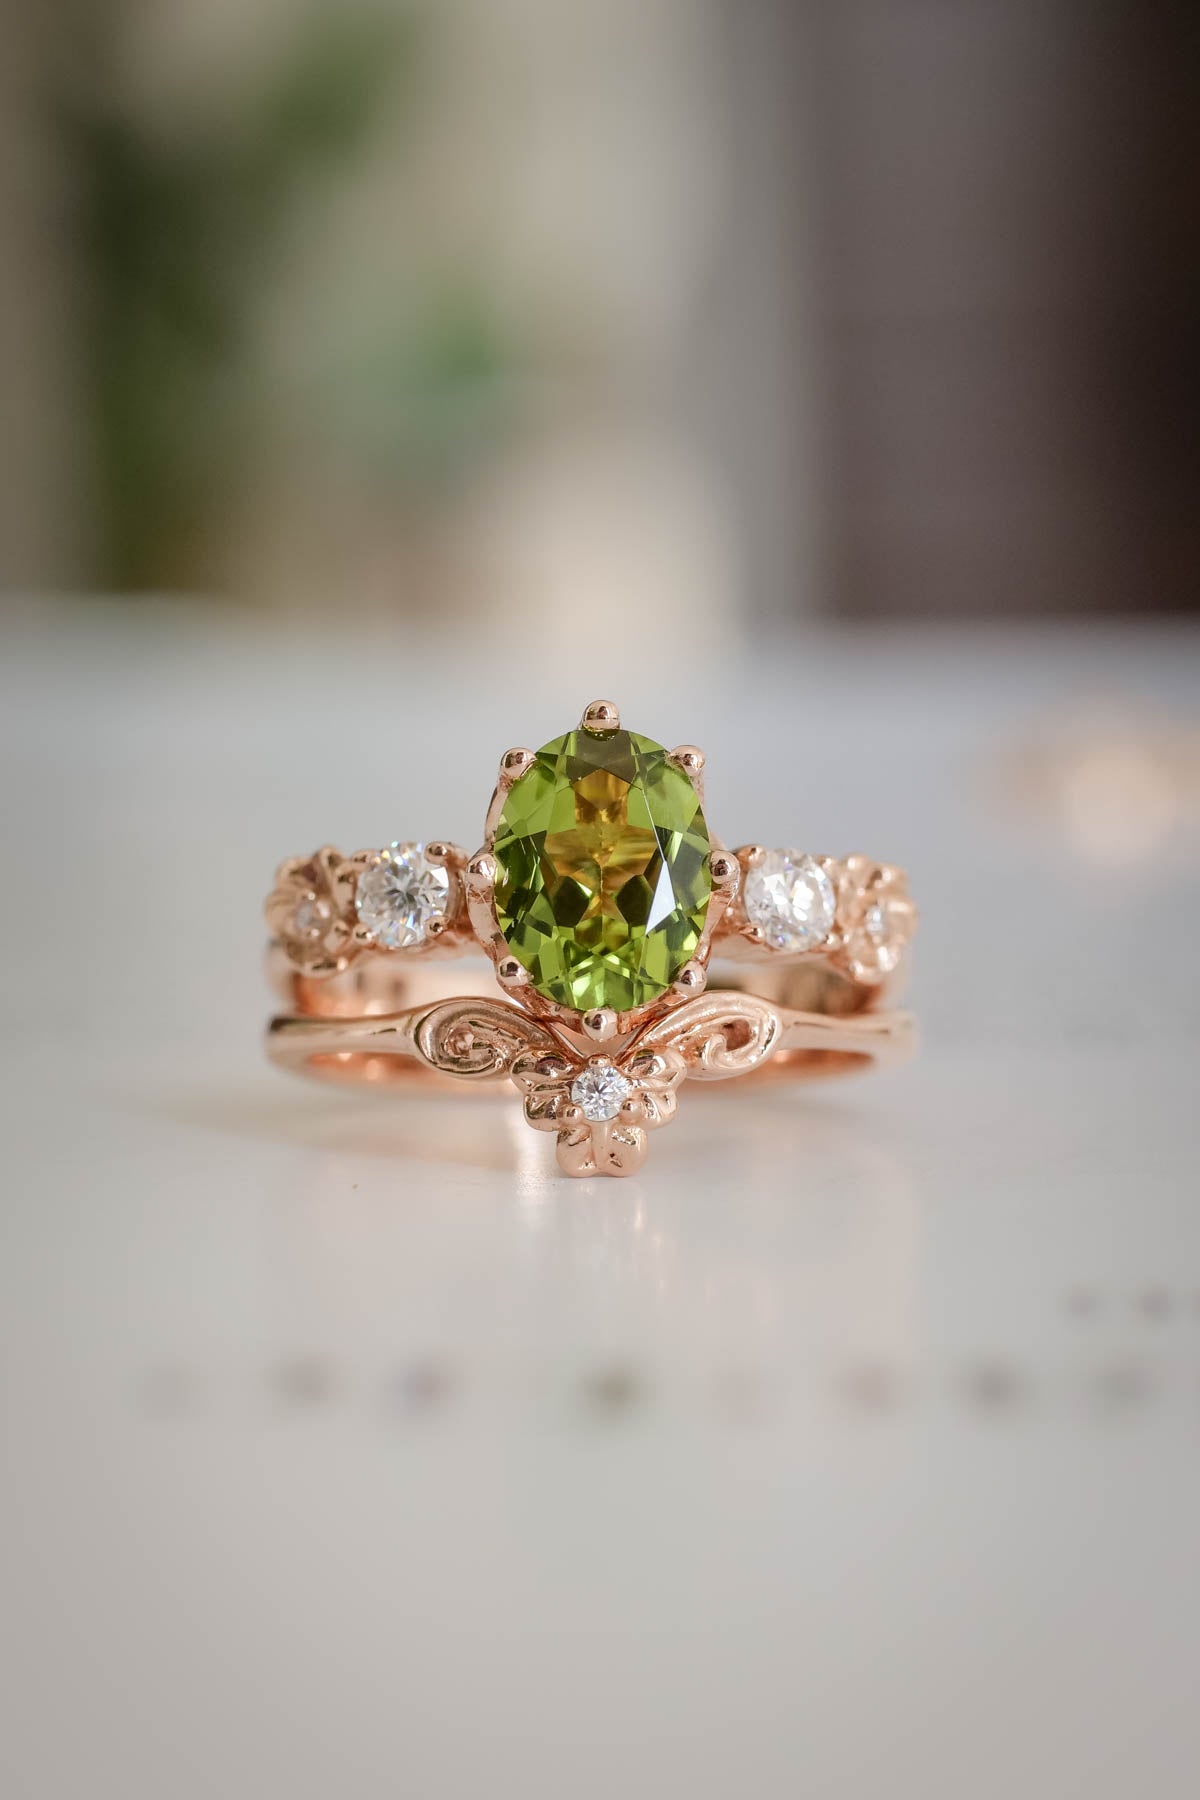 Elvish engagement ring set with peridot, fantasy gold flower rings / Fiorella - Eden Garden Jewelry™